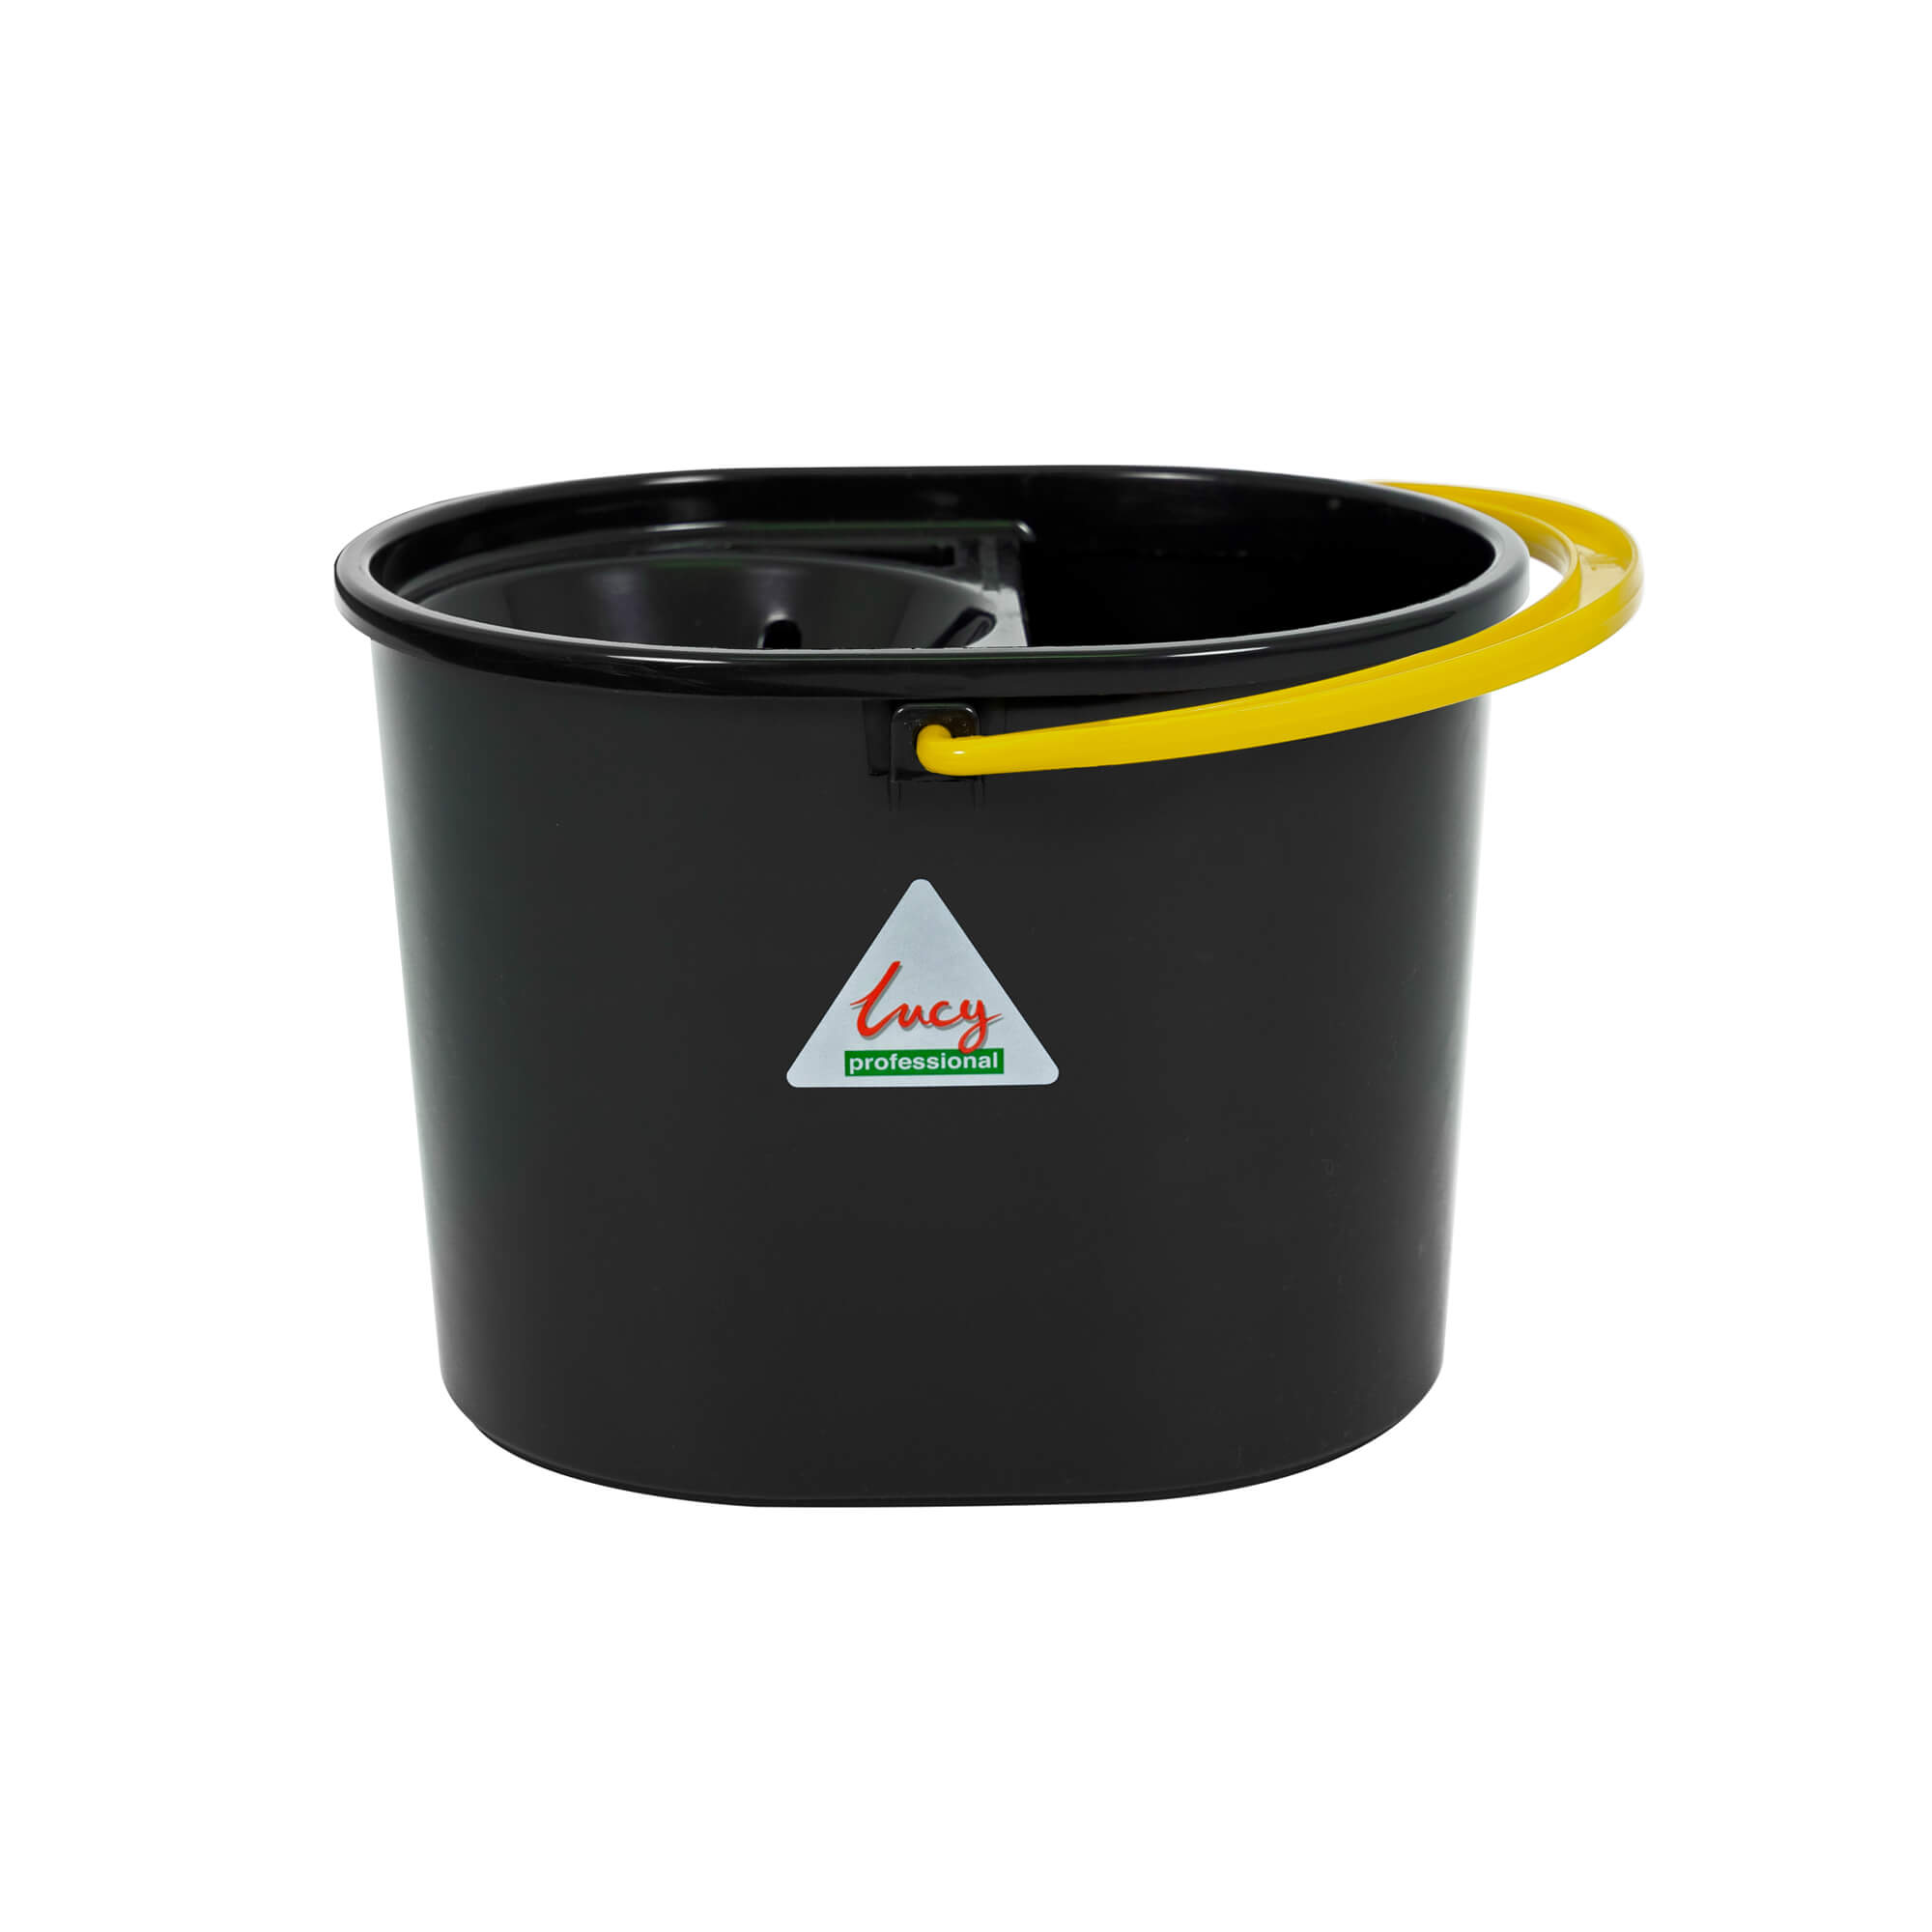 Lucy Plastic Mop Bucket, Yellow - 2102-02Y